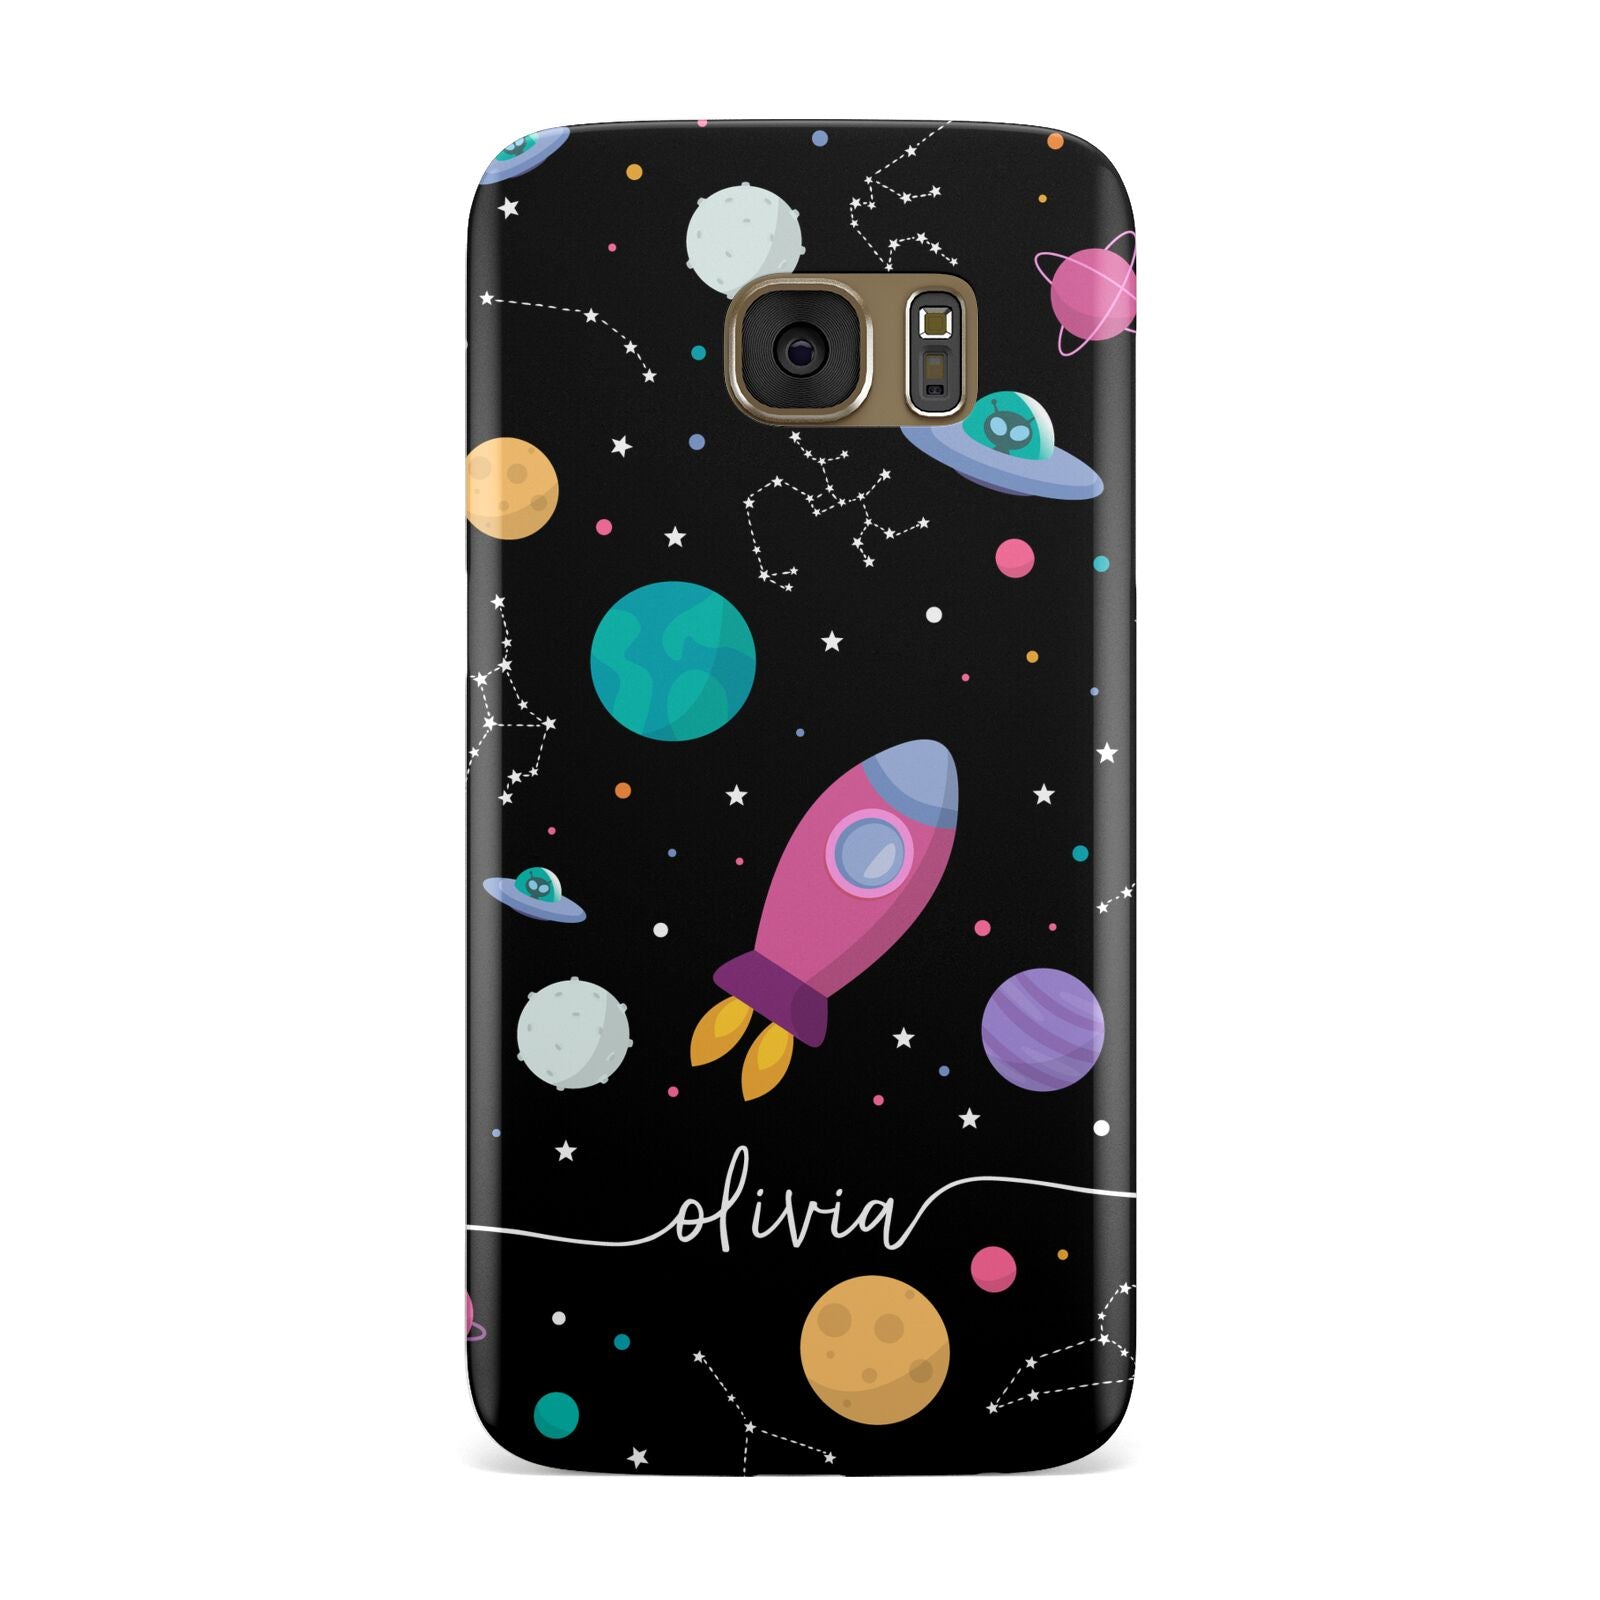 Galaxy Artwork with Name Samsung Galaxy Case